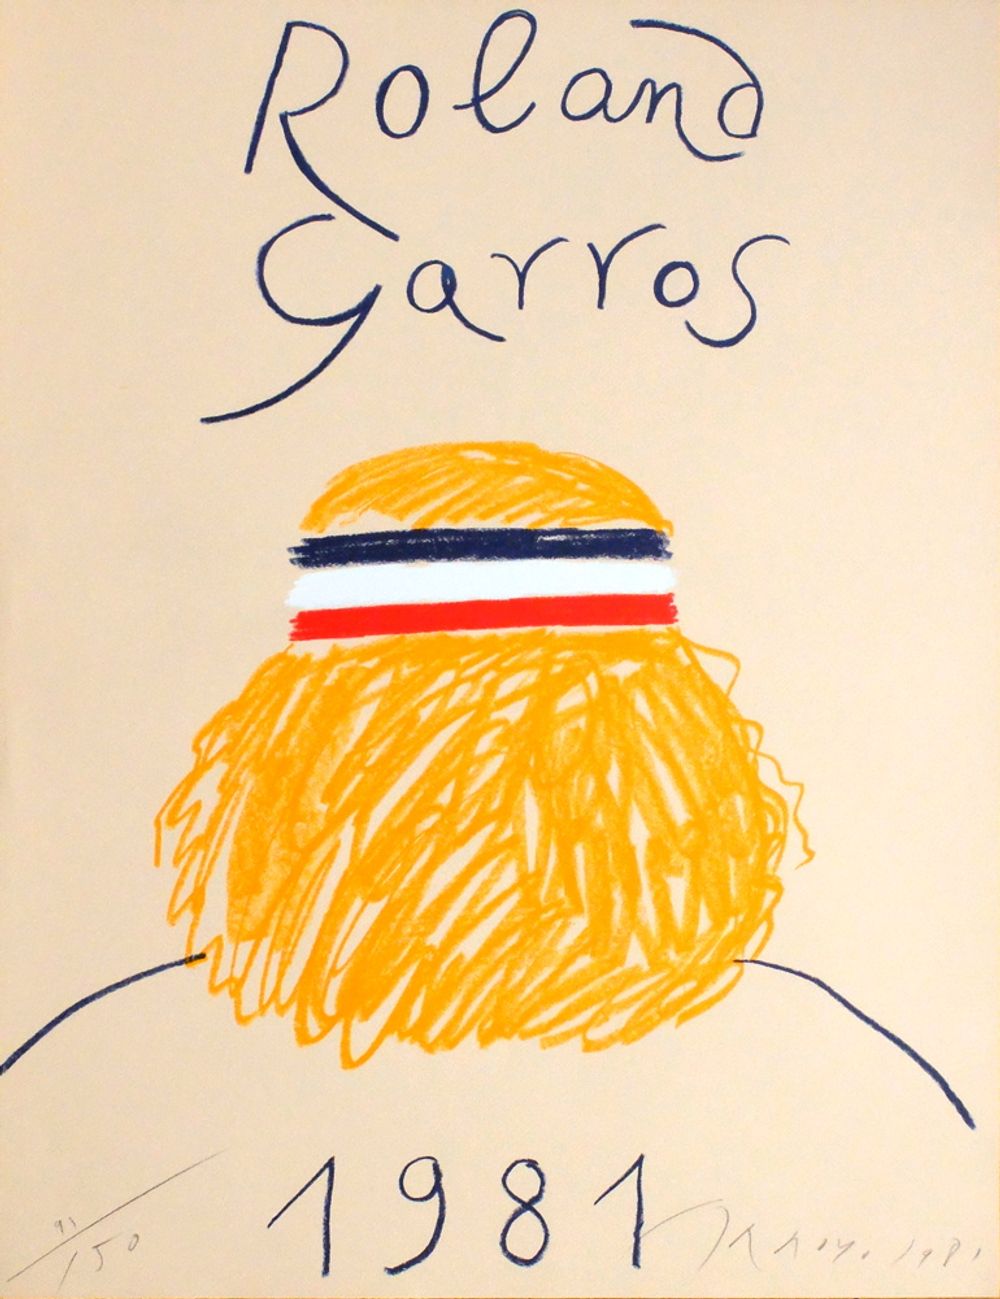 Roland-Garros 1981